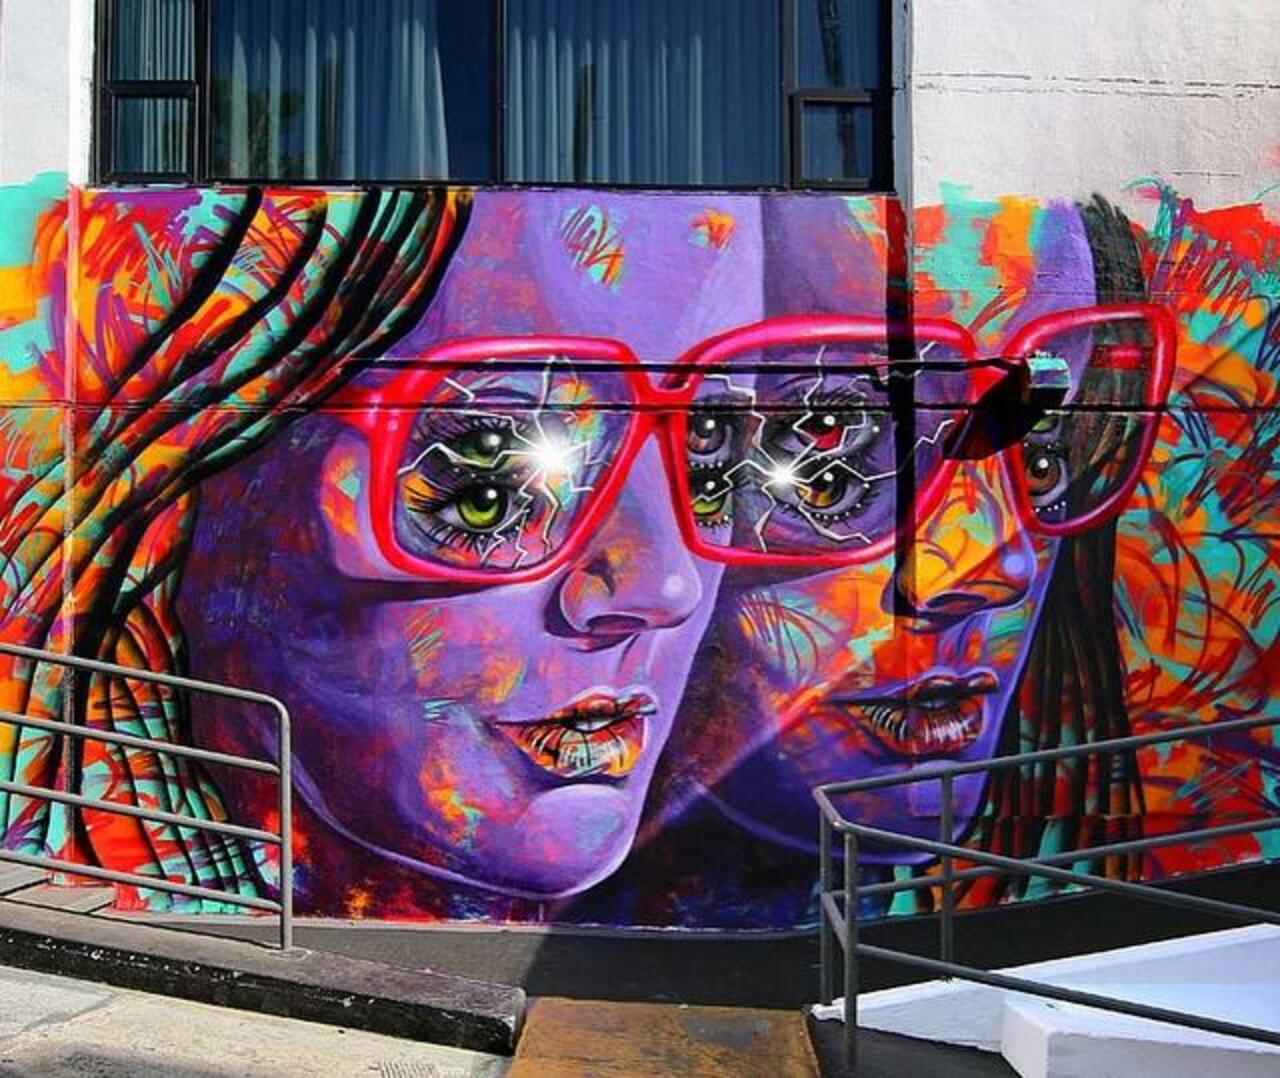 Fantastic new Street Art by MADSTEEZ 

#art #arte #graffiti #streetart http://t.co/UjINkQoSLC